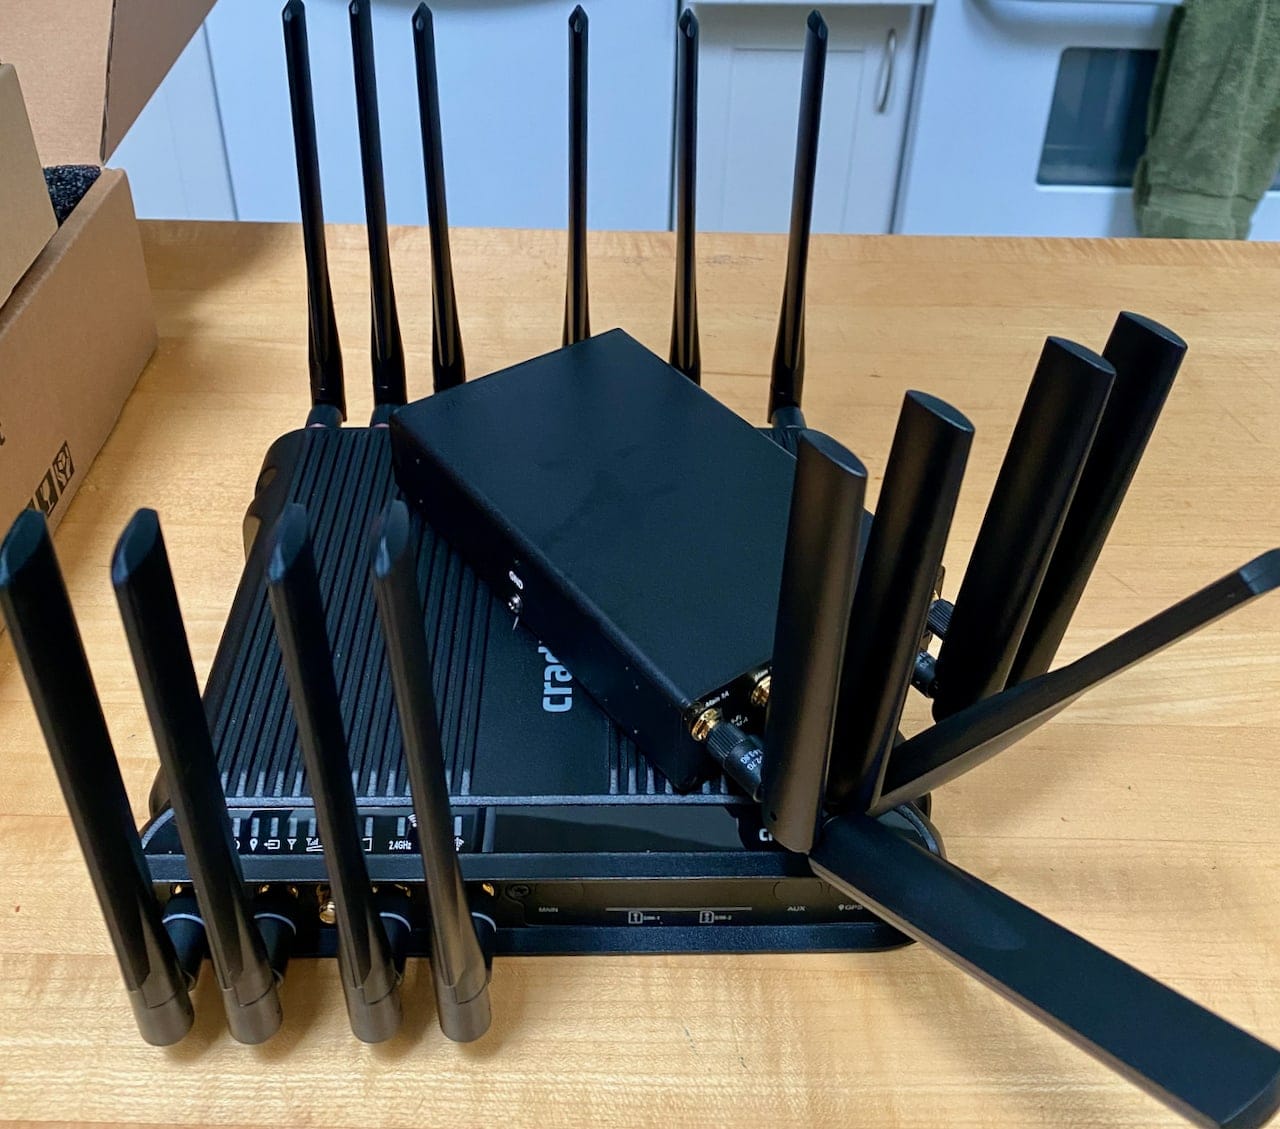 New routers & antennas under test